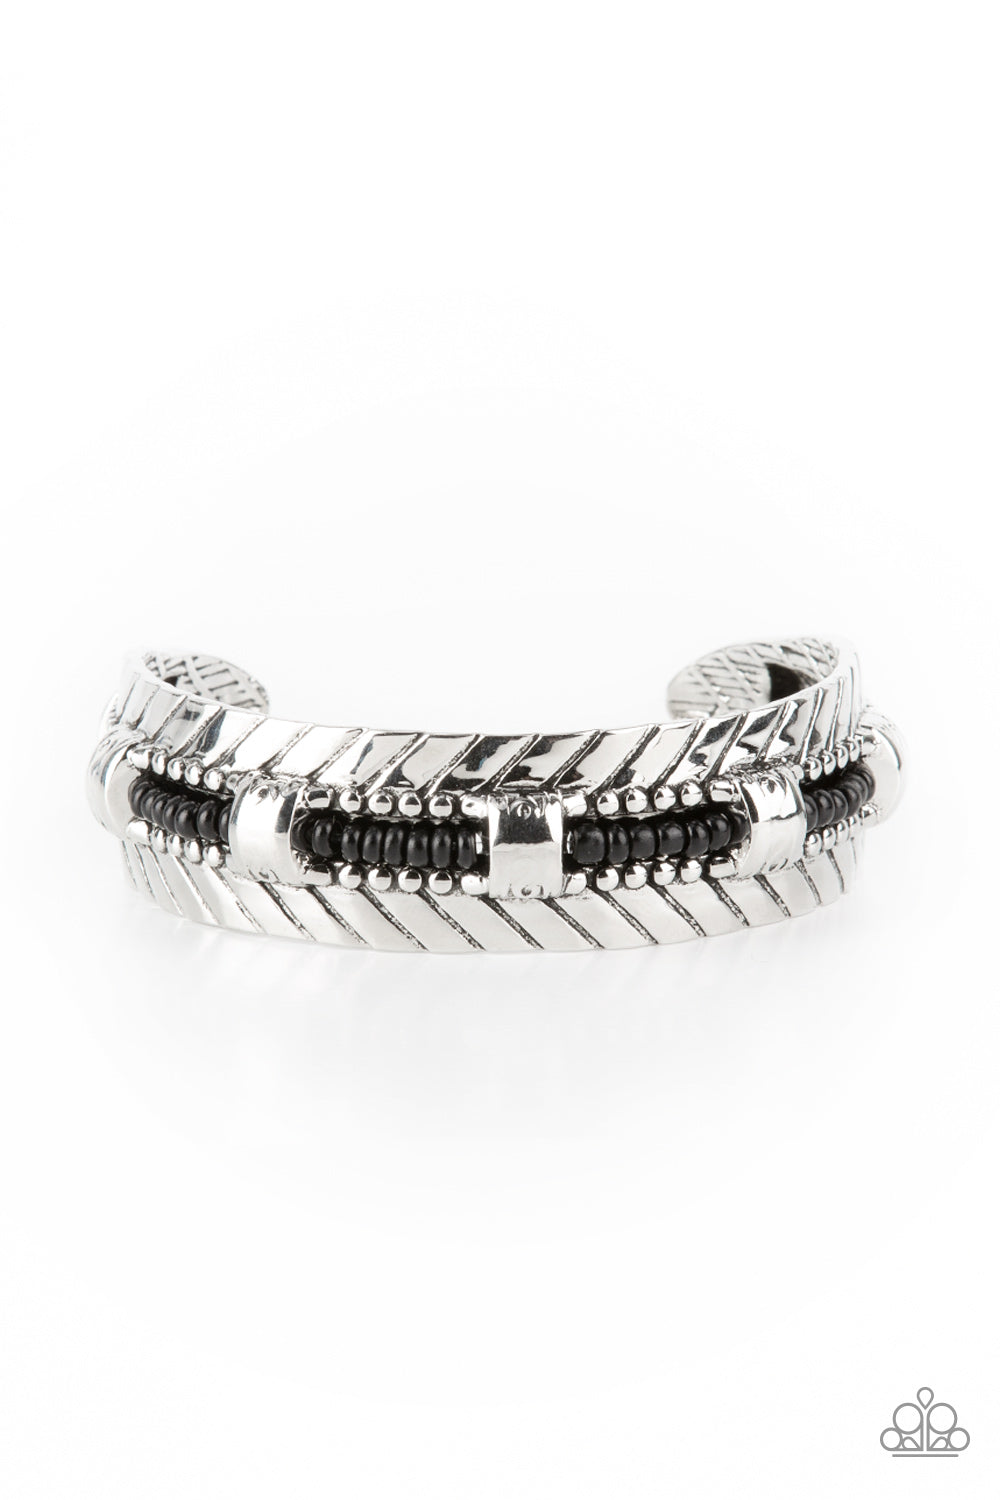 Sonoran Scene - Black (Seed Bead) Silver Frame Bracelet freeshipping - JewLz4u Gemstone Gallery